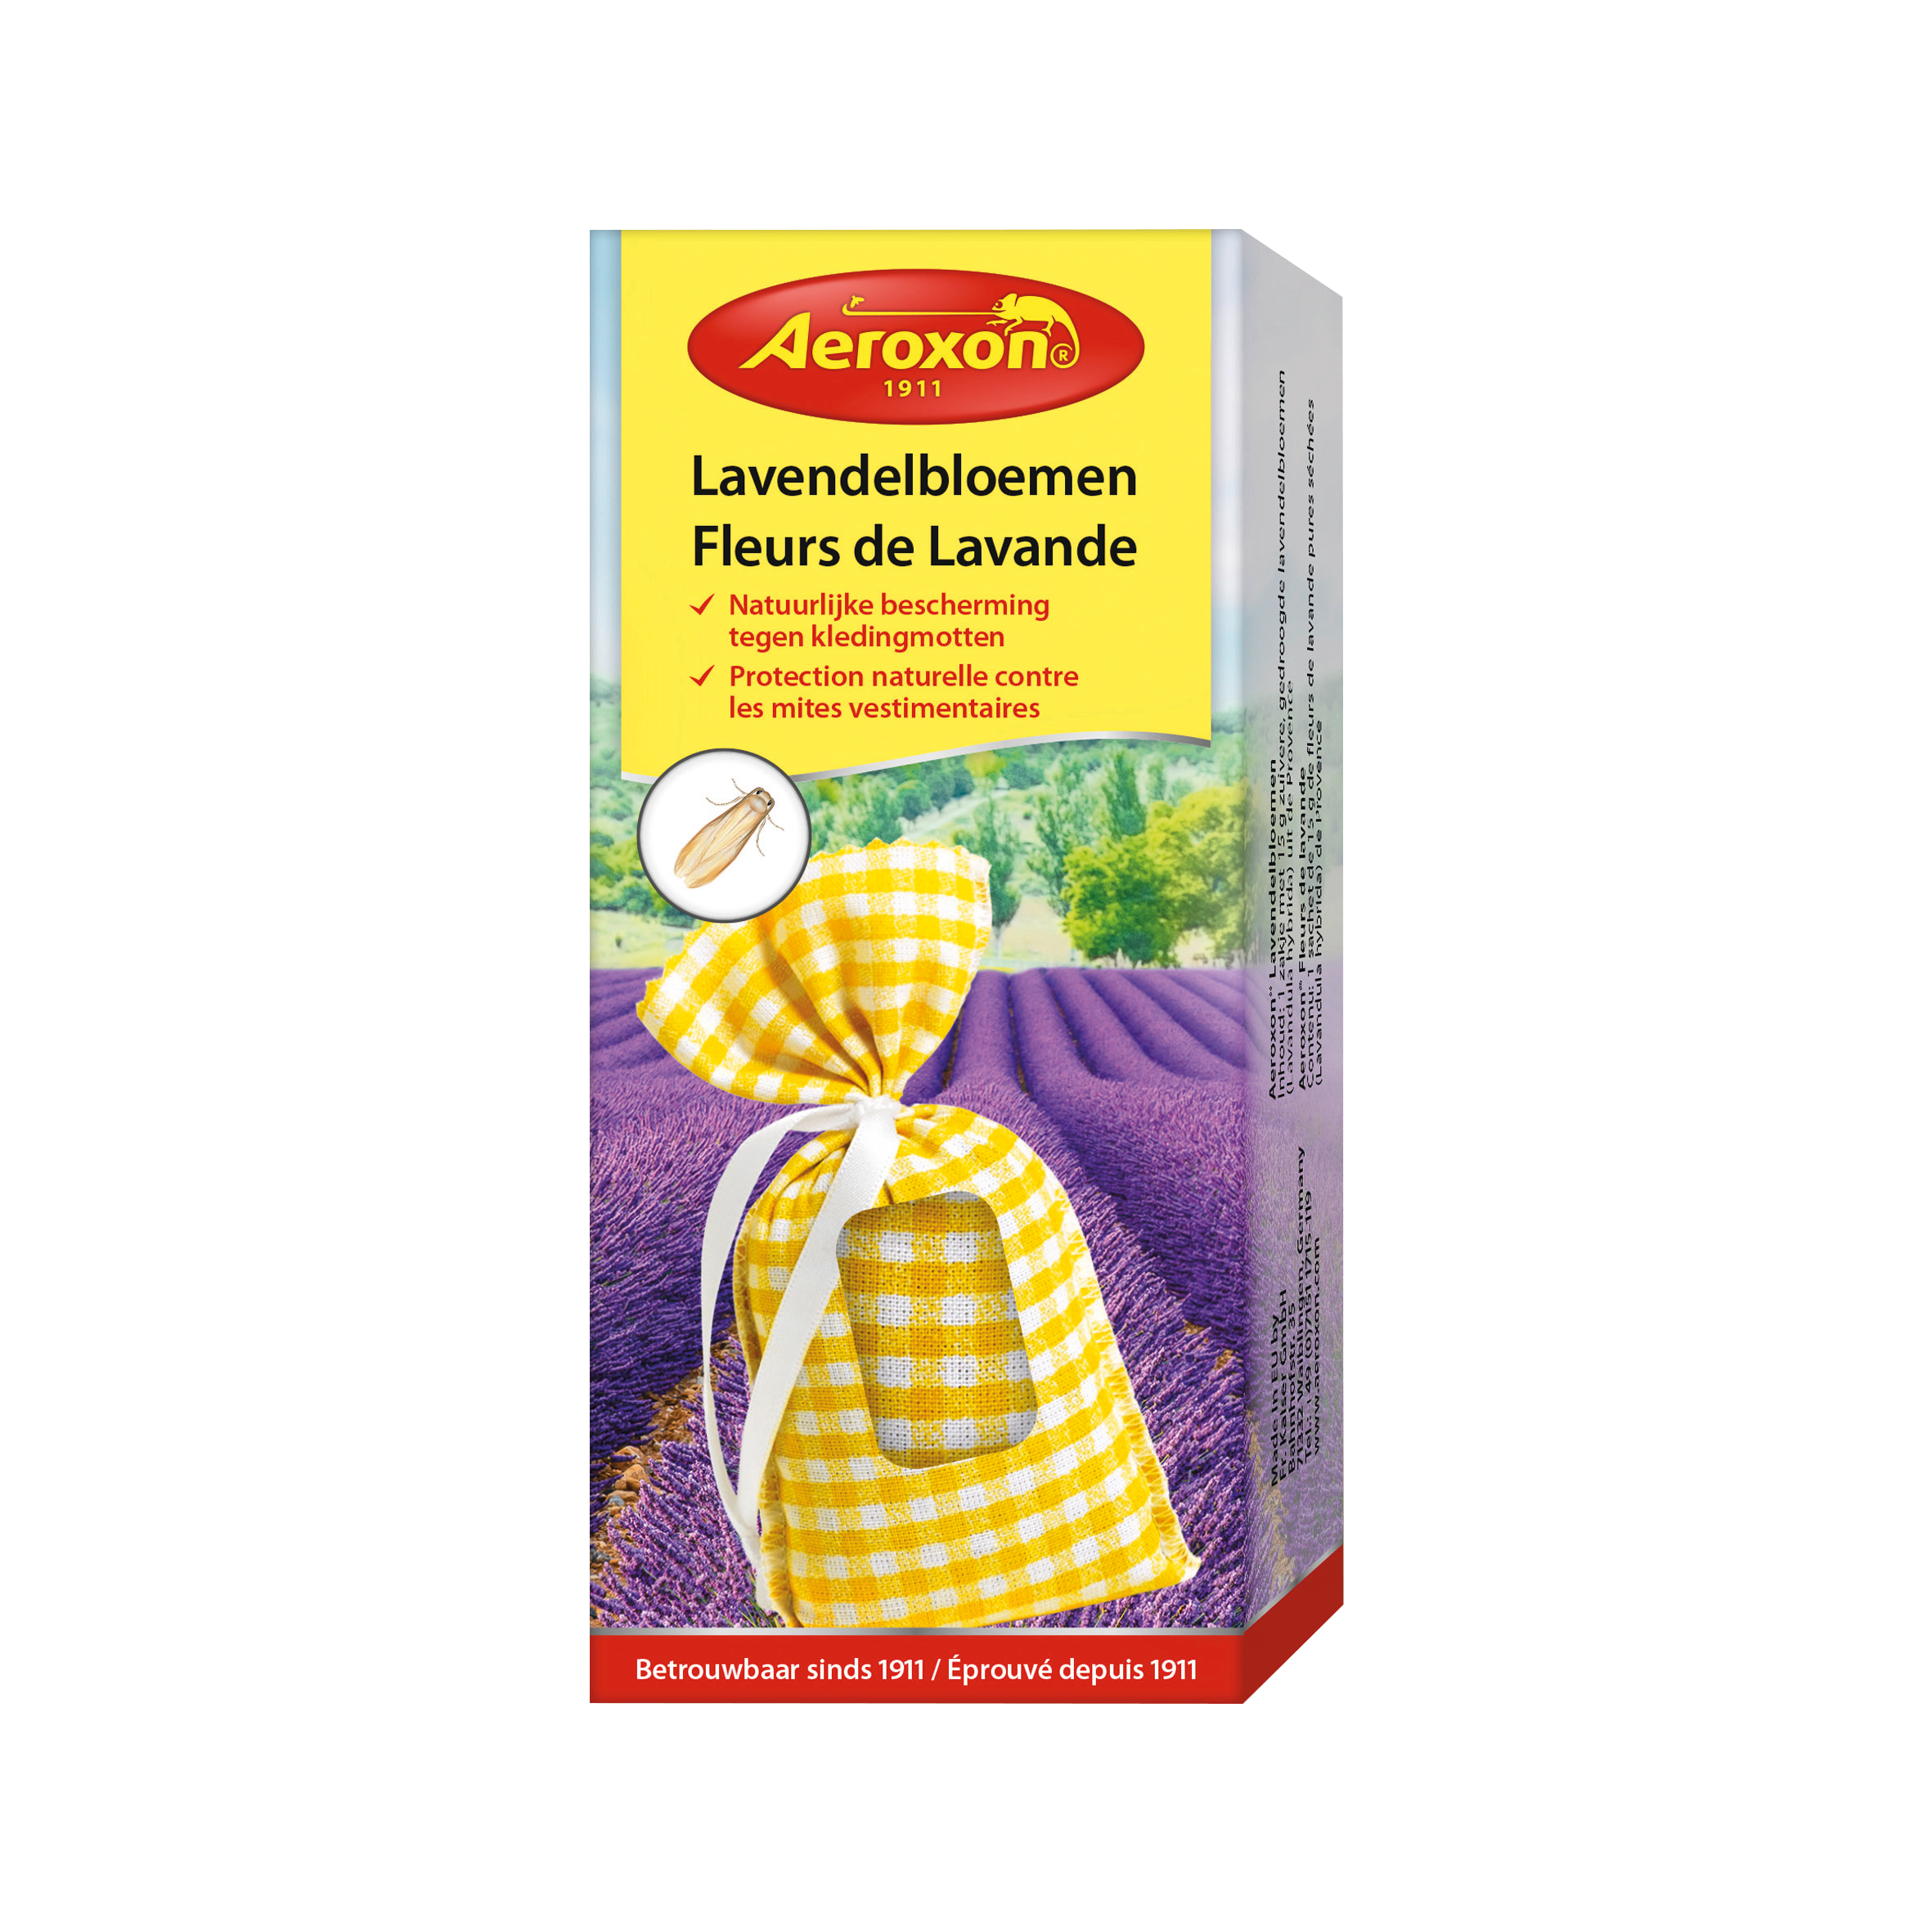 Aeroxon Lavendelbloemen image